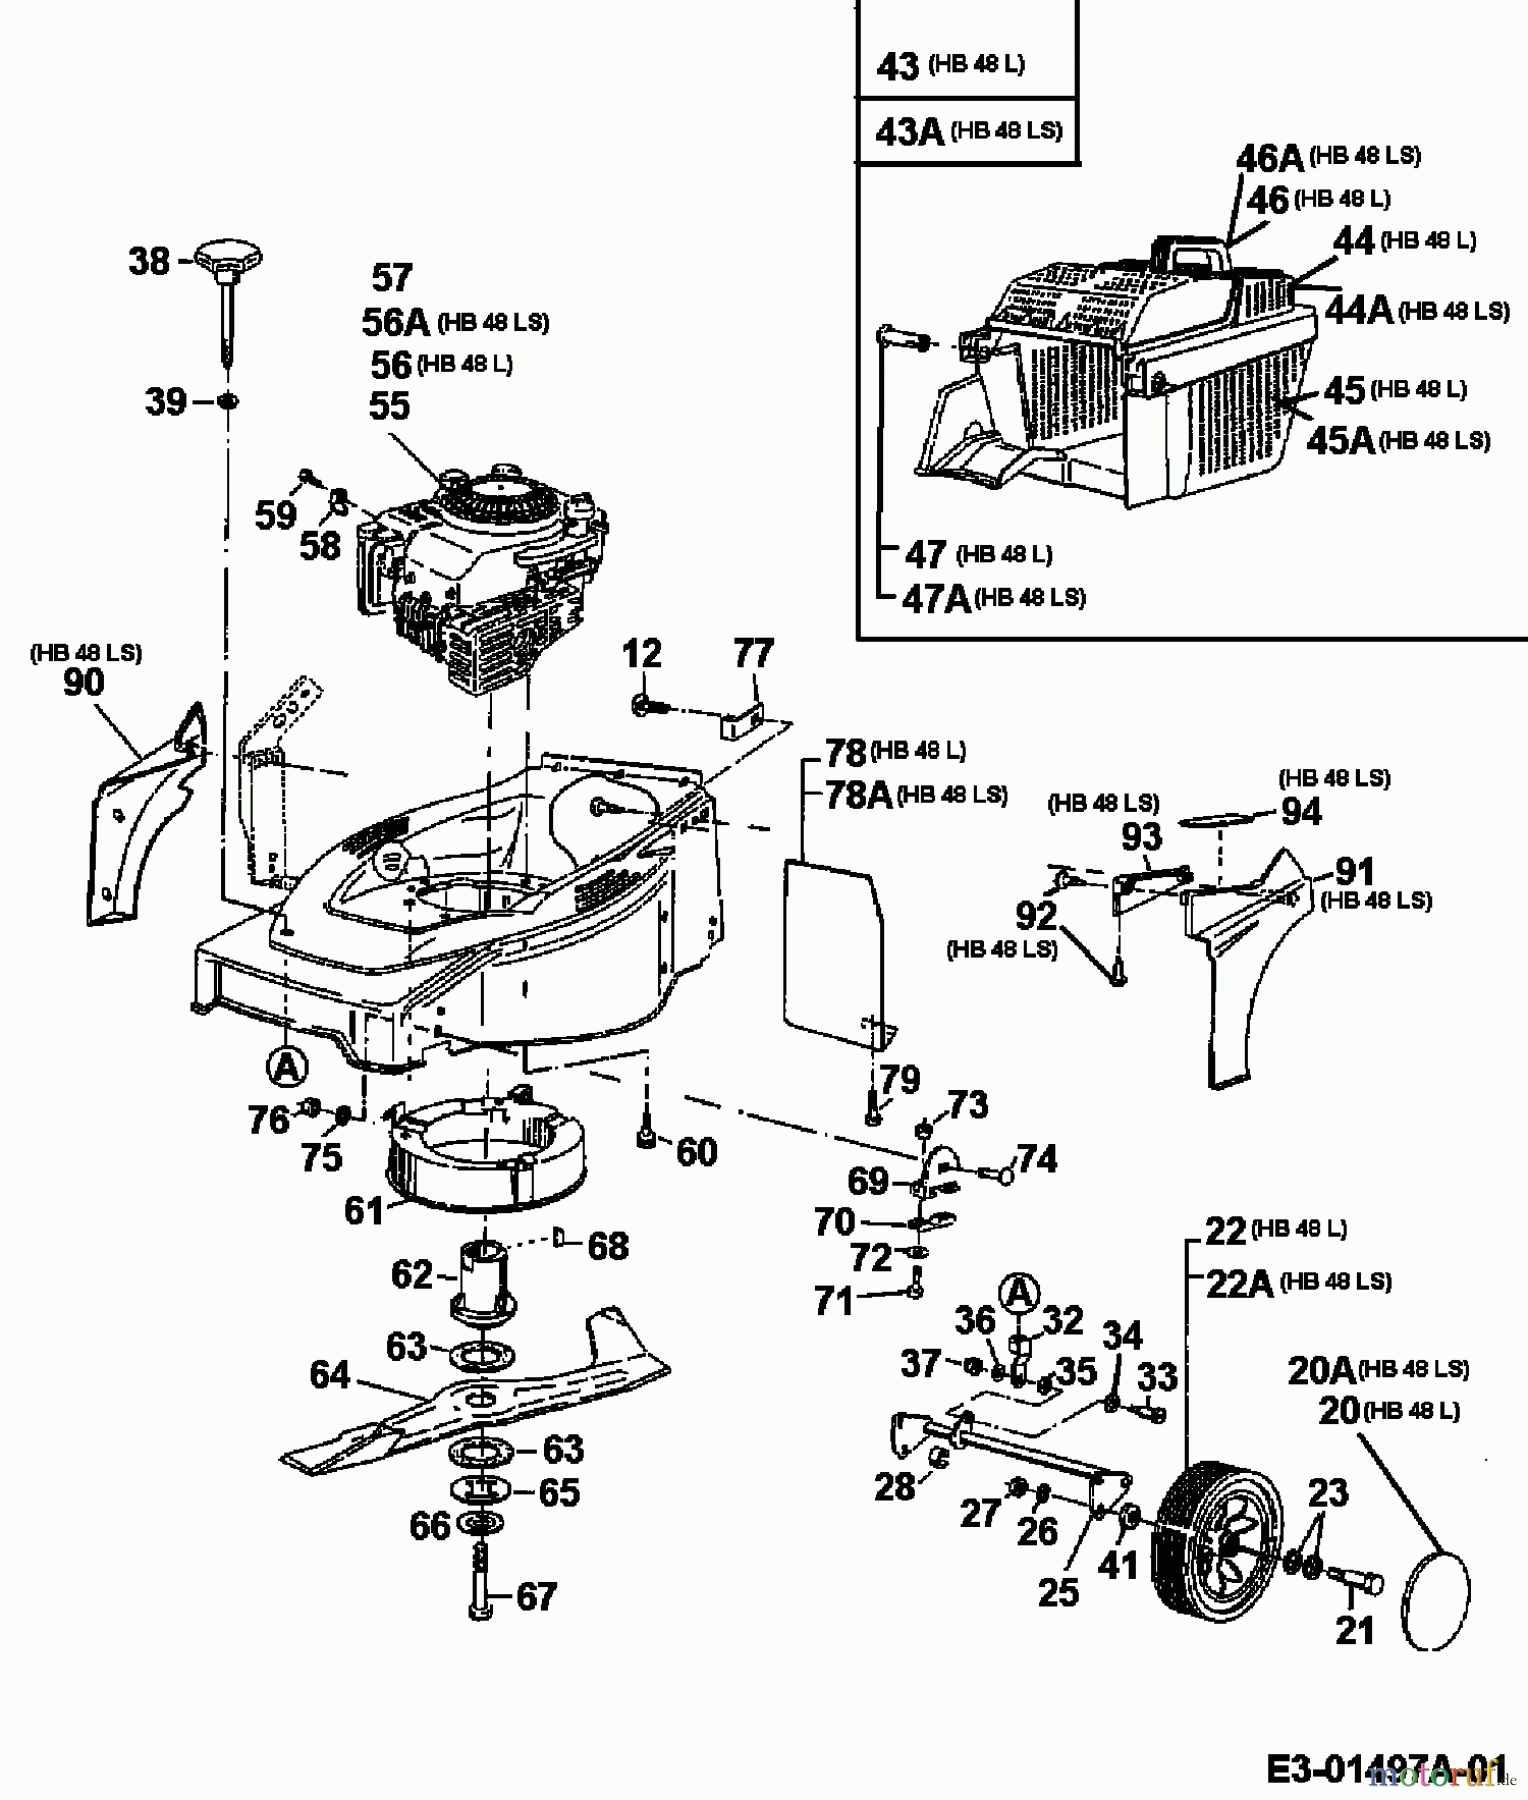  Gutbrod Petrol mower HB 48 L 11C-T58V604  (2000) Basic machine